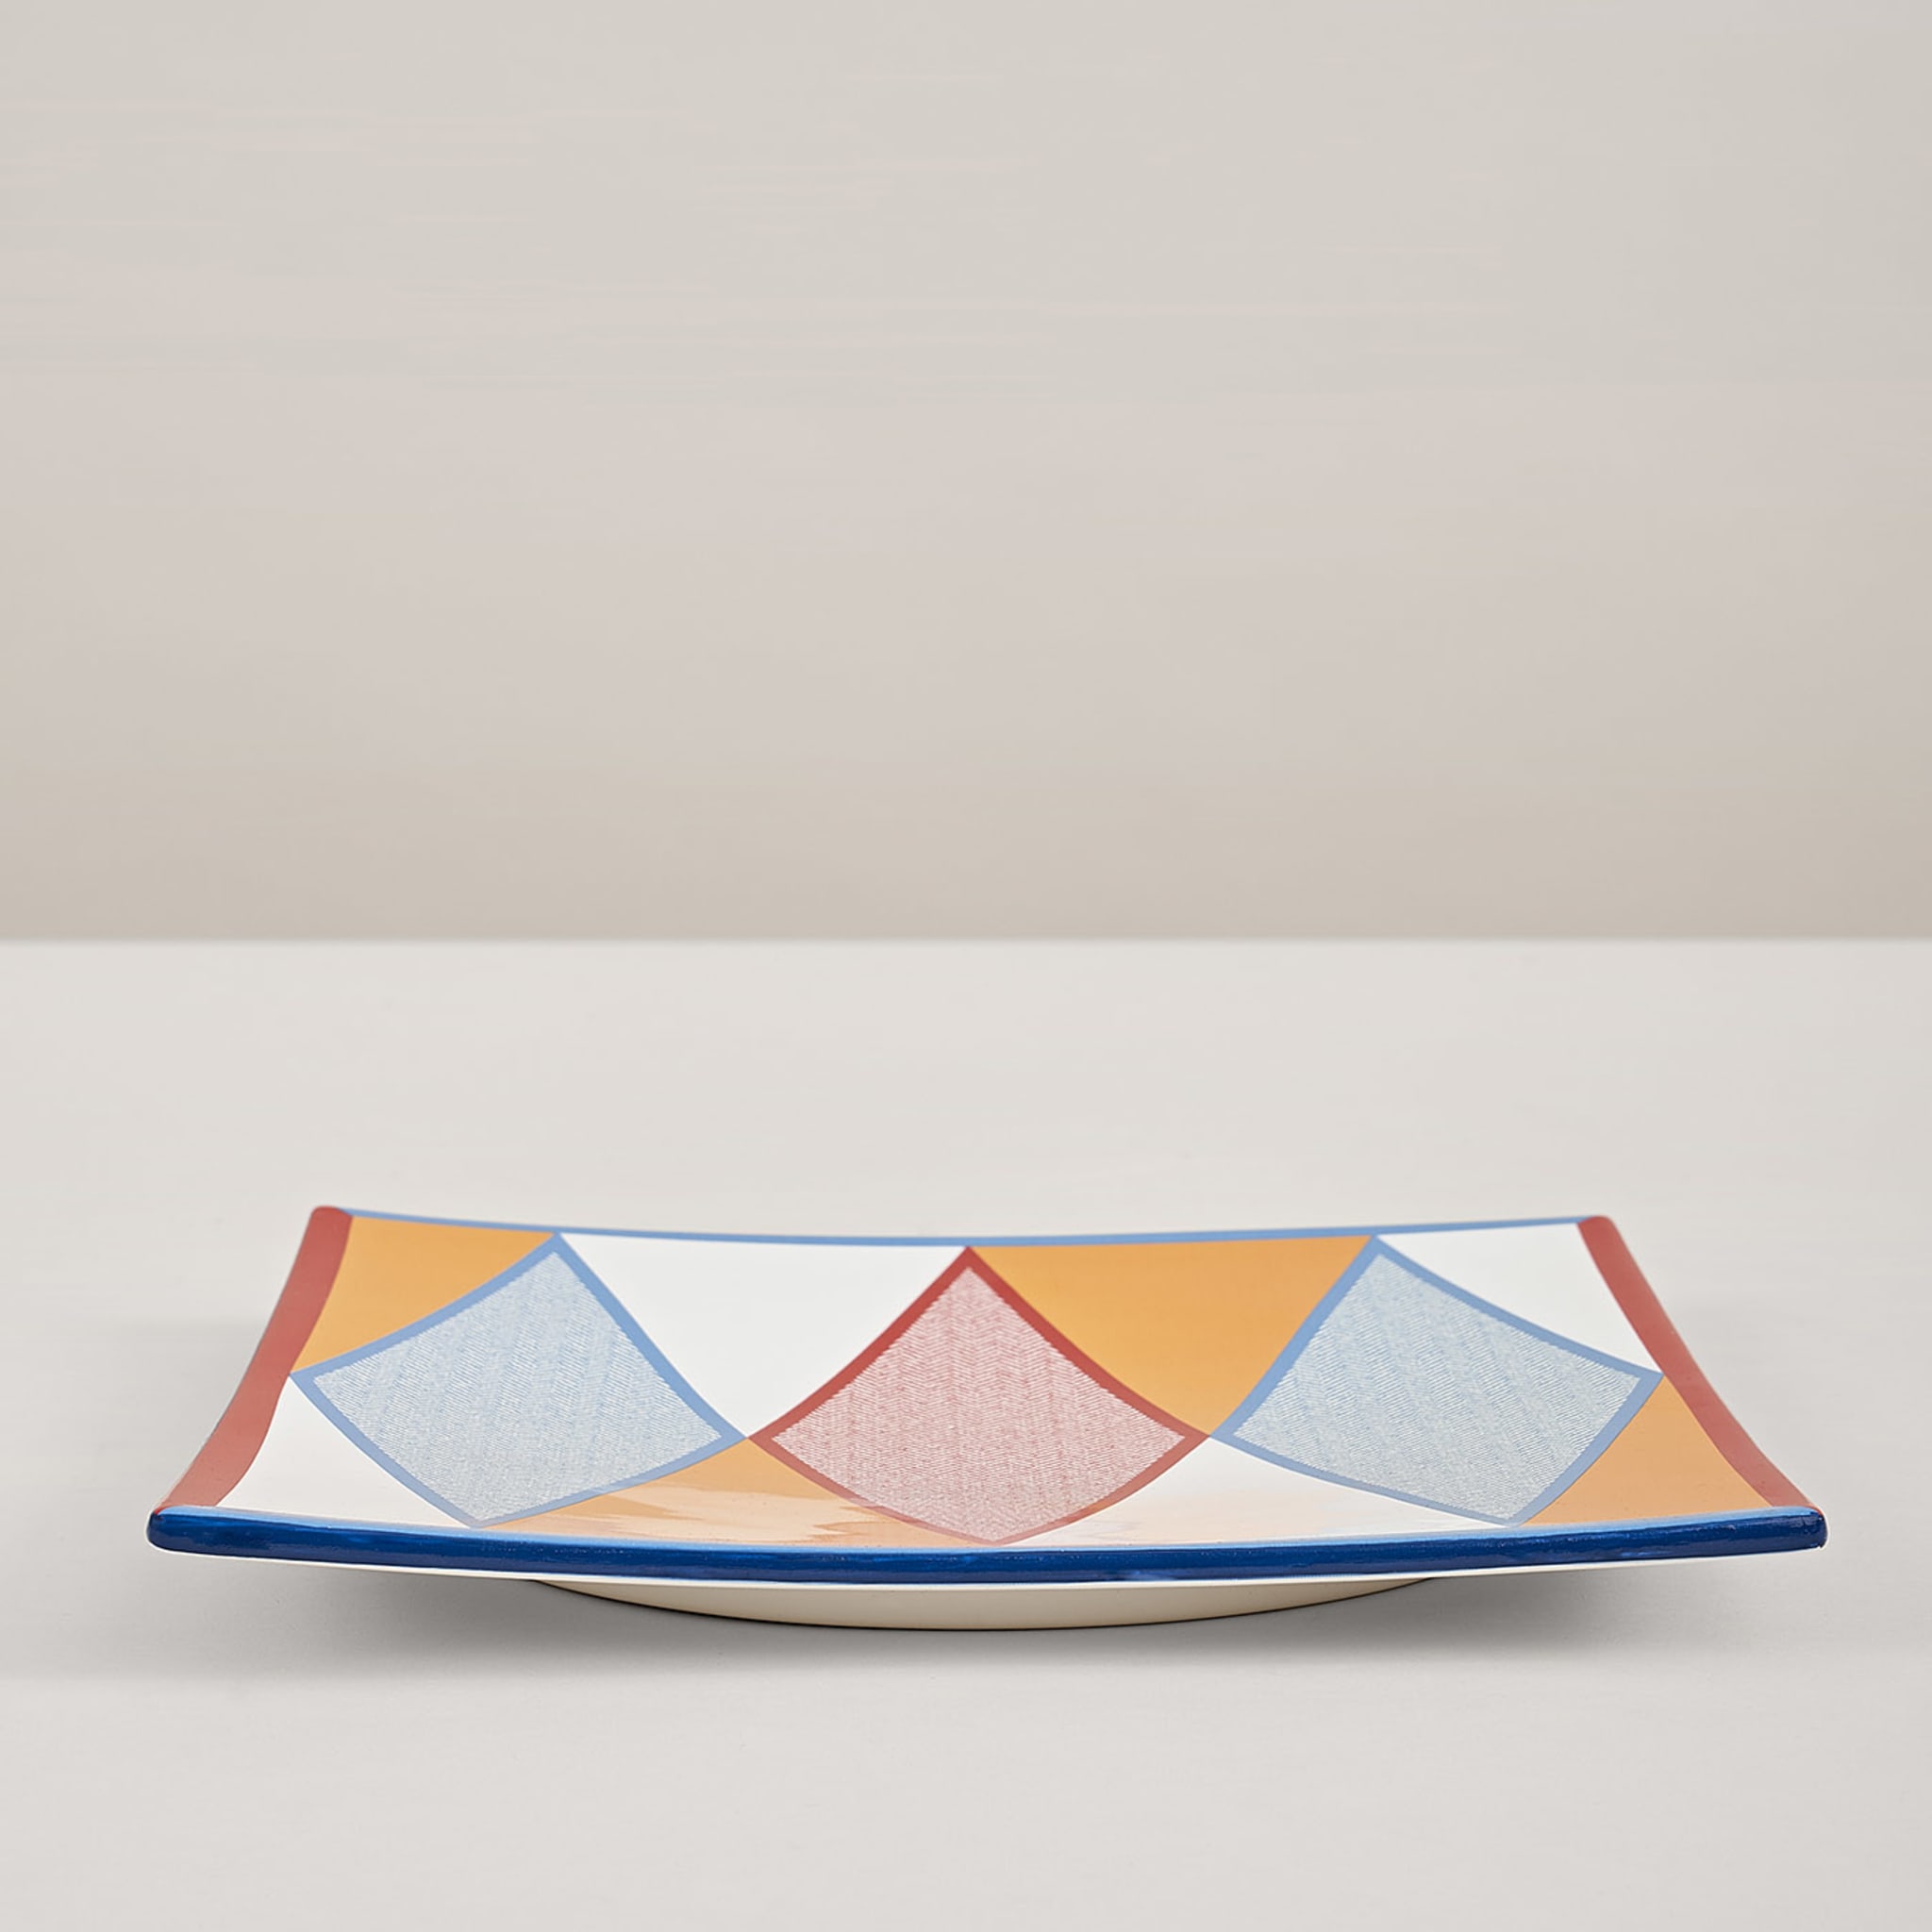 Maxi Harlequin Ceramic Centerpiece #1 - Alternative view 1